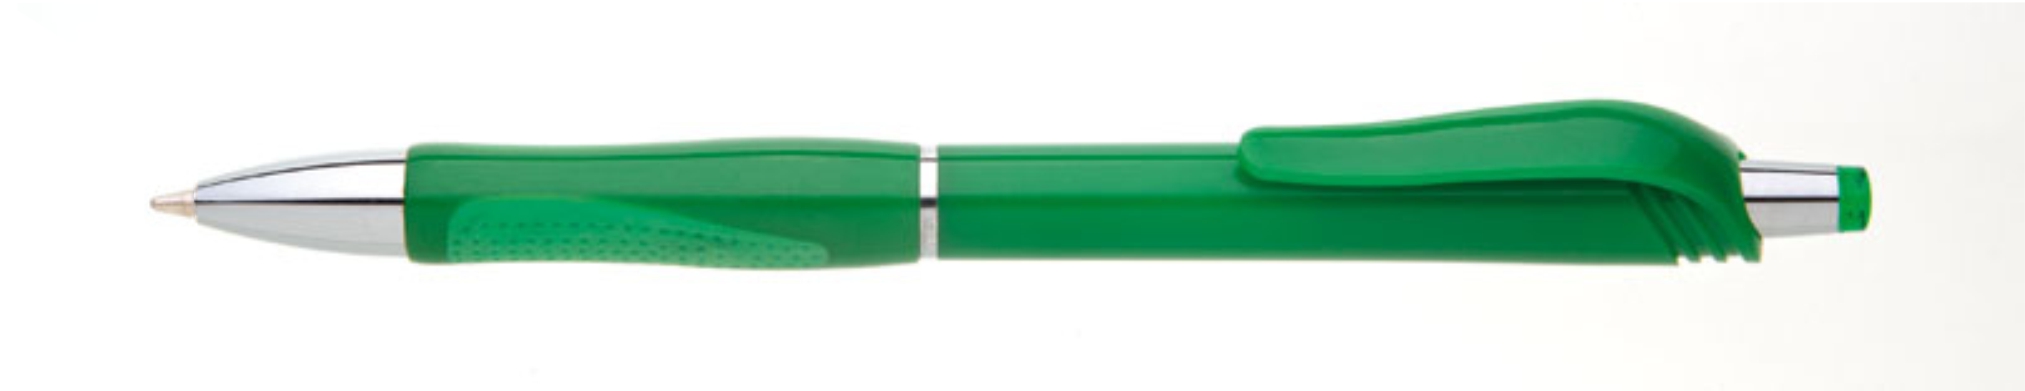 Propiska plast SALA hrot 1mm, zelená